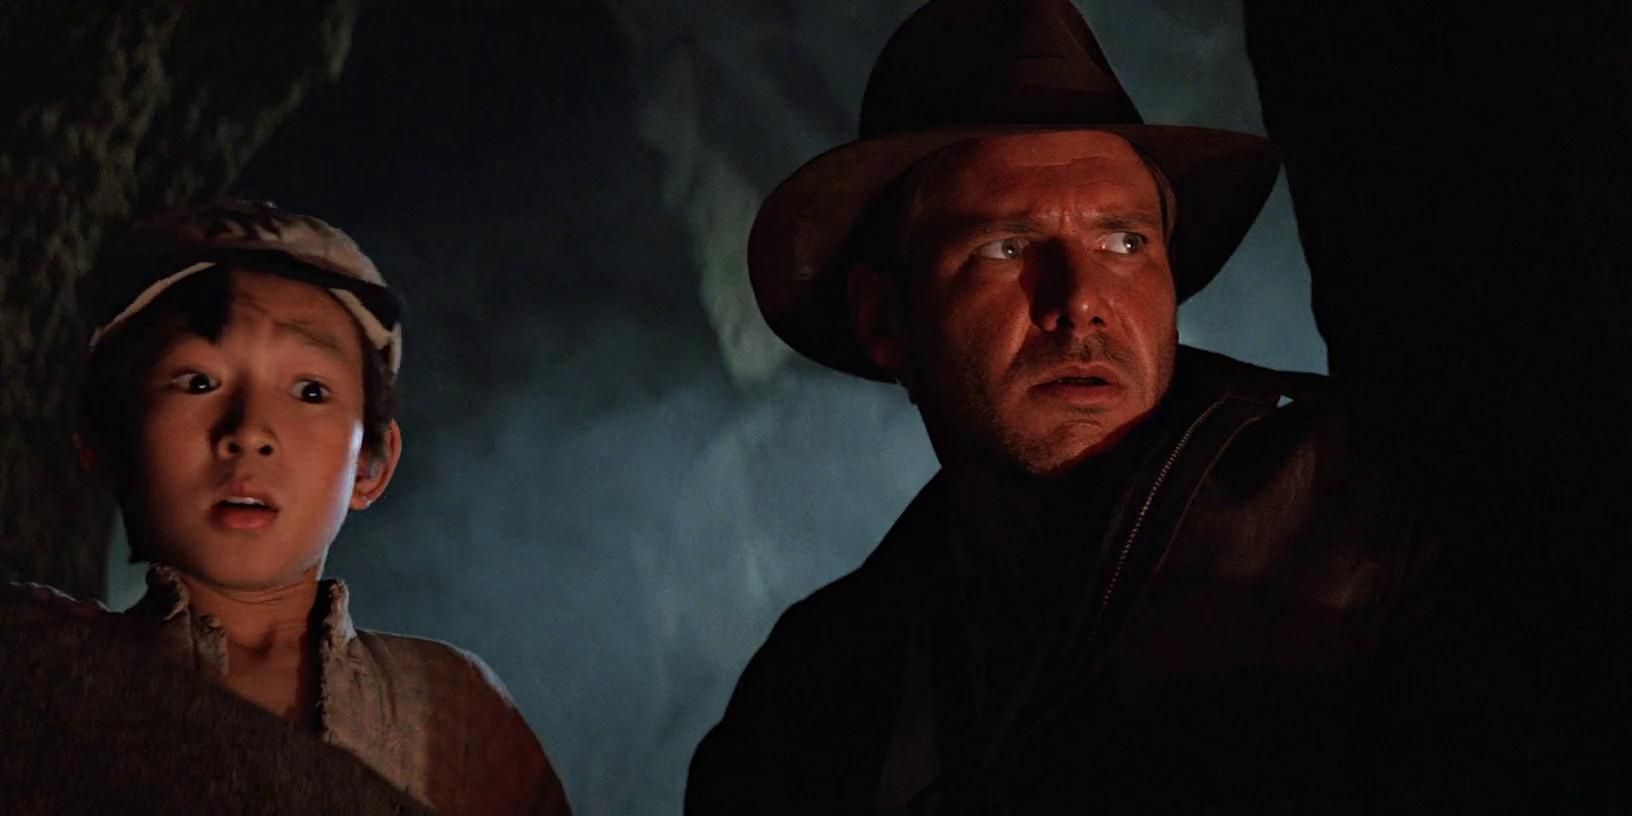 Short Round and Indiana Jones in Temple of Doom